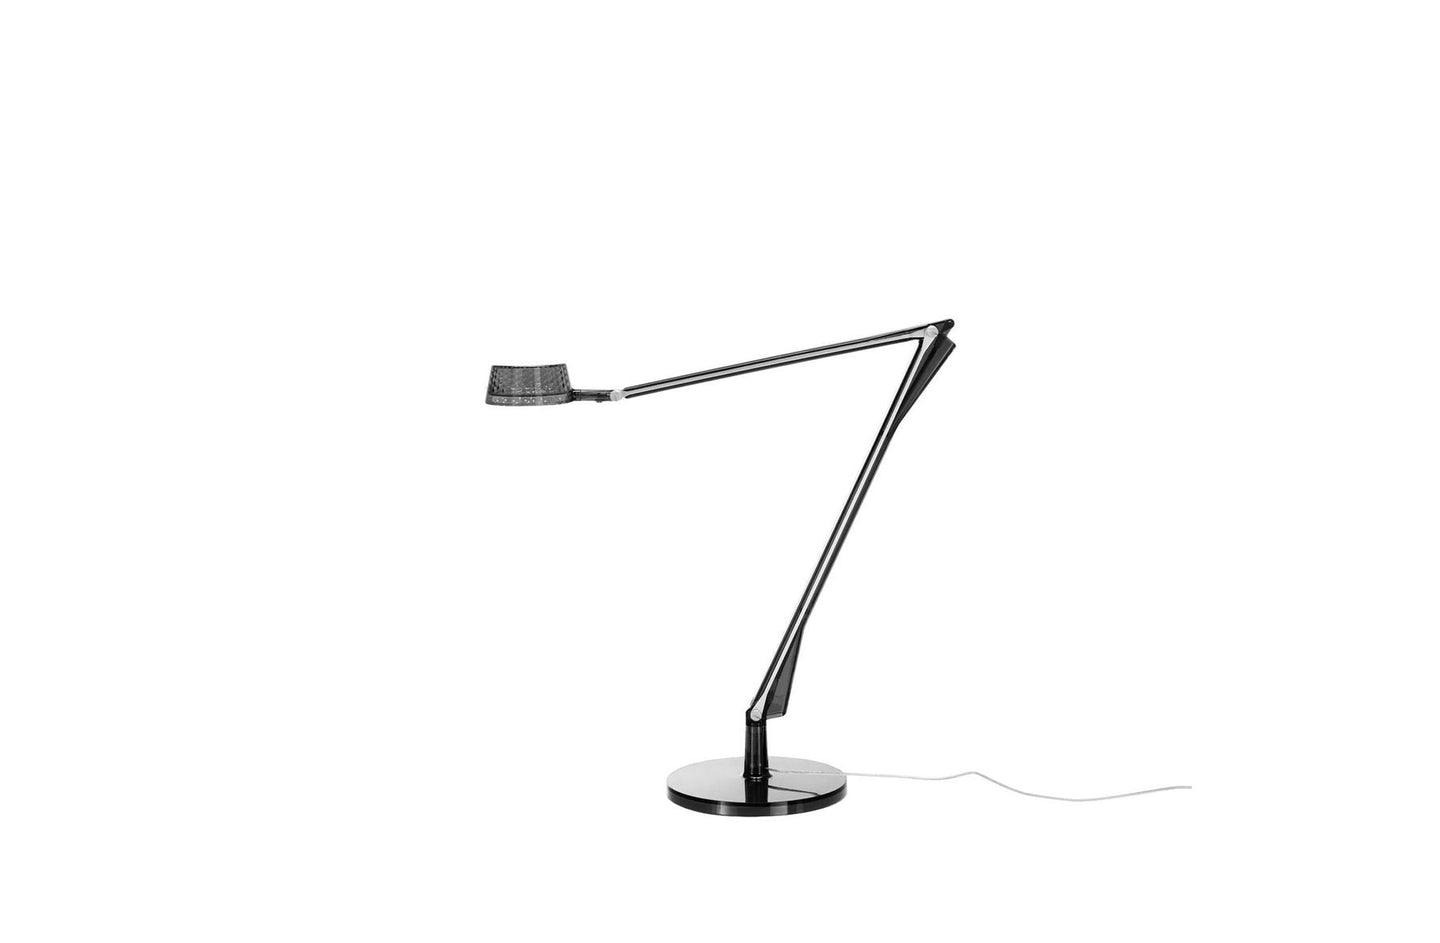 Aledin Dec Desk Lamp
